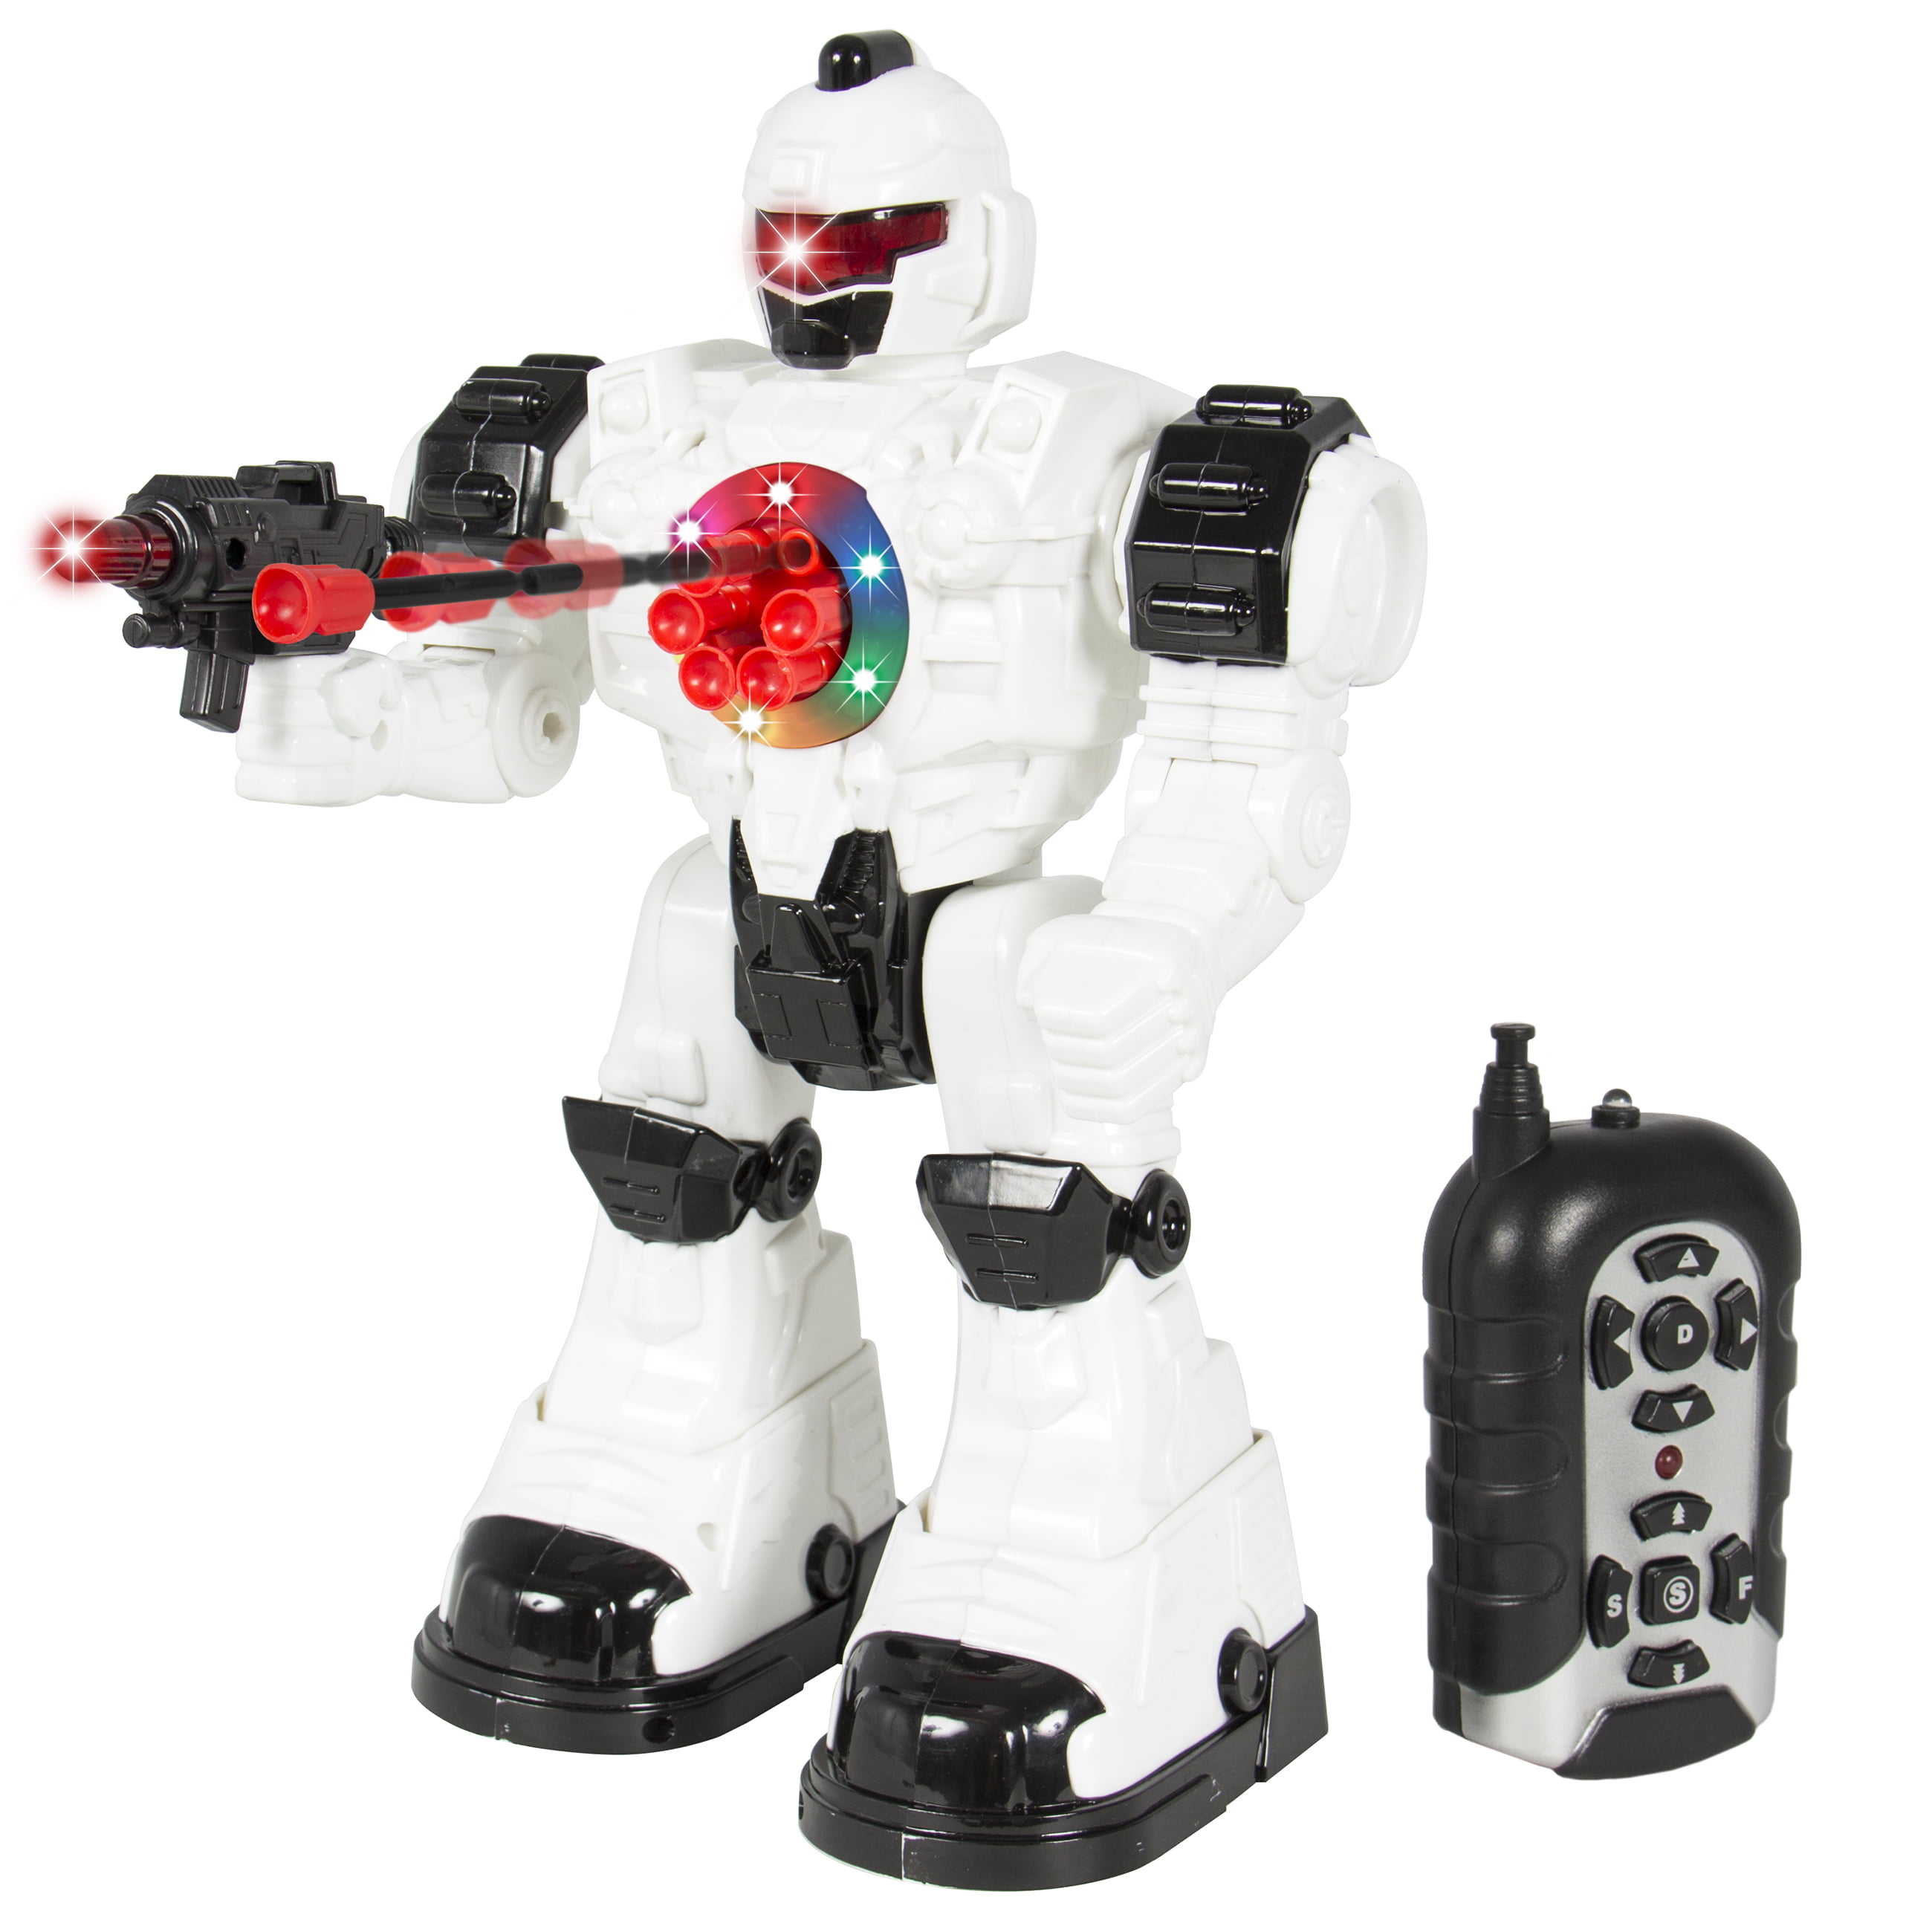 talkingToy xmas Gift For Kids NEW  Robot Walking,dancing,shoot missiles lights 